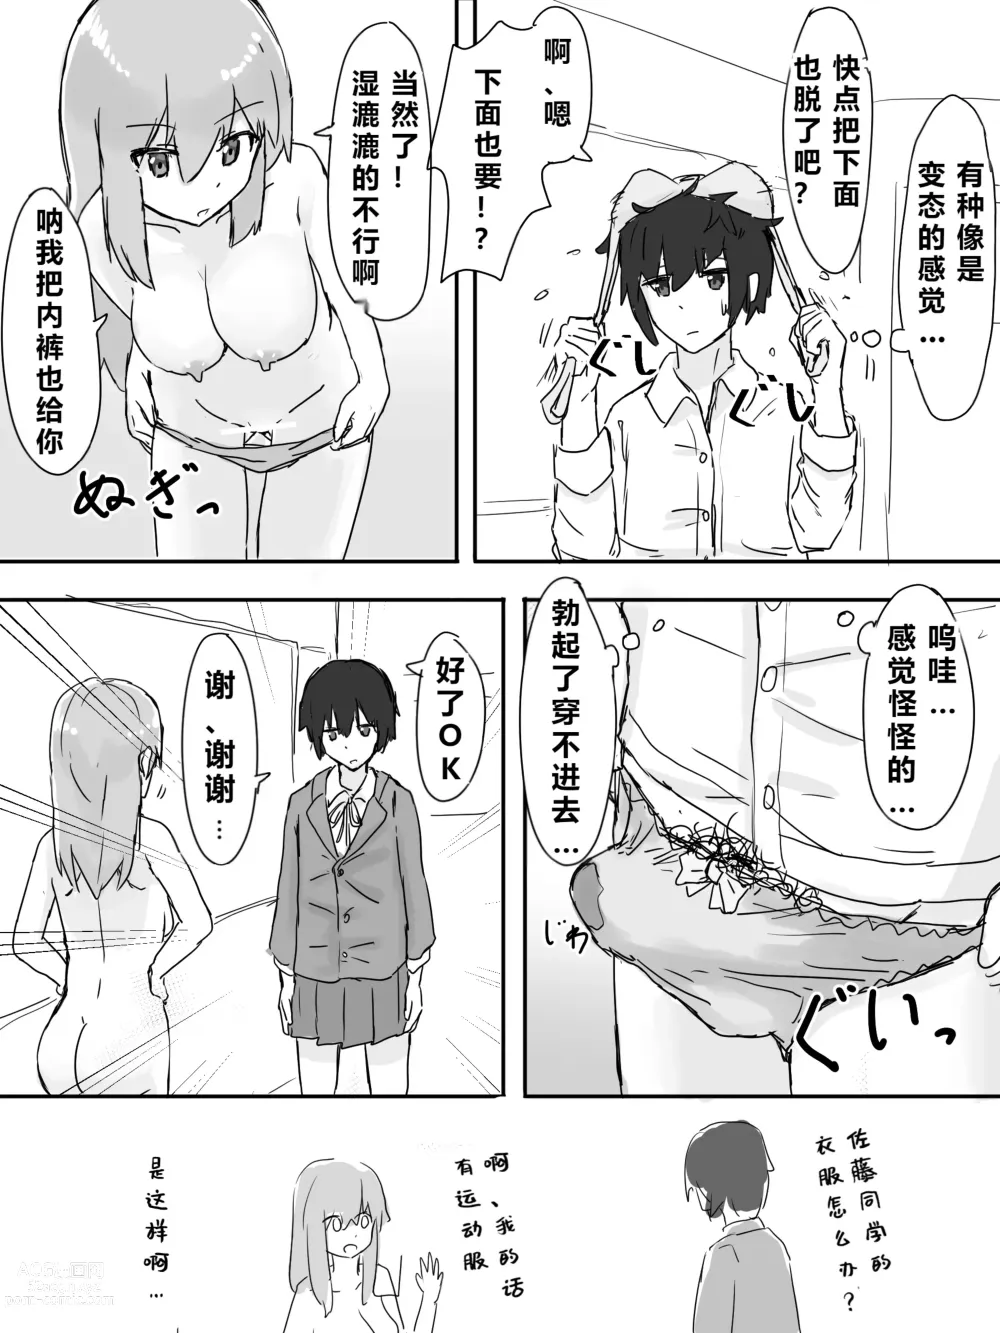 Page 132 of manga Joushiki Kaihen